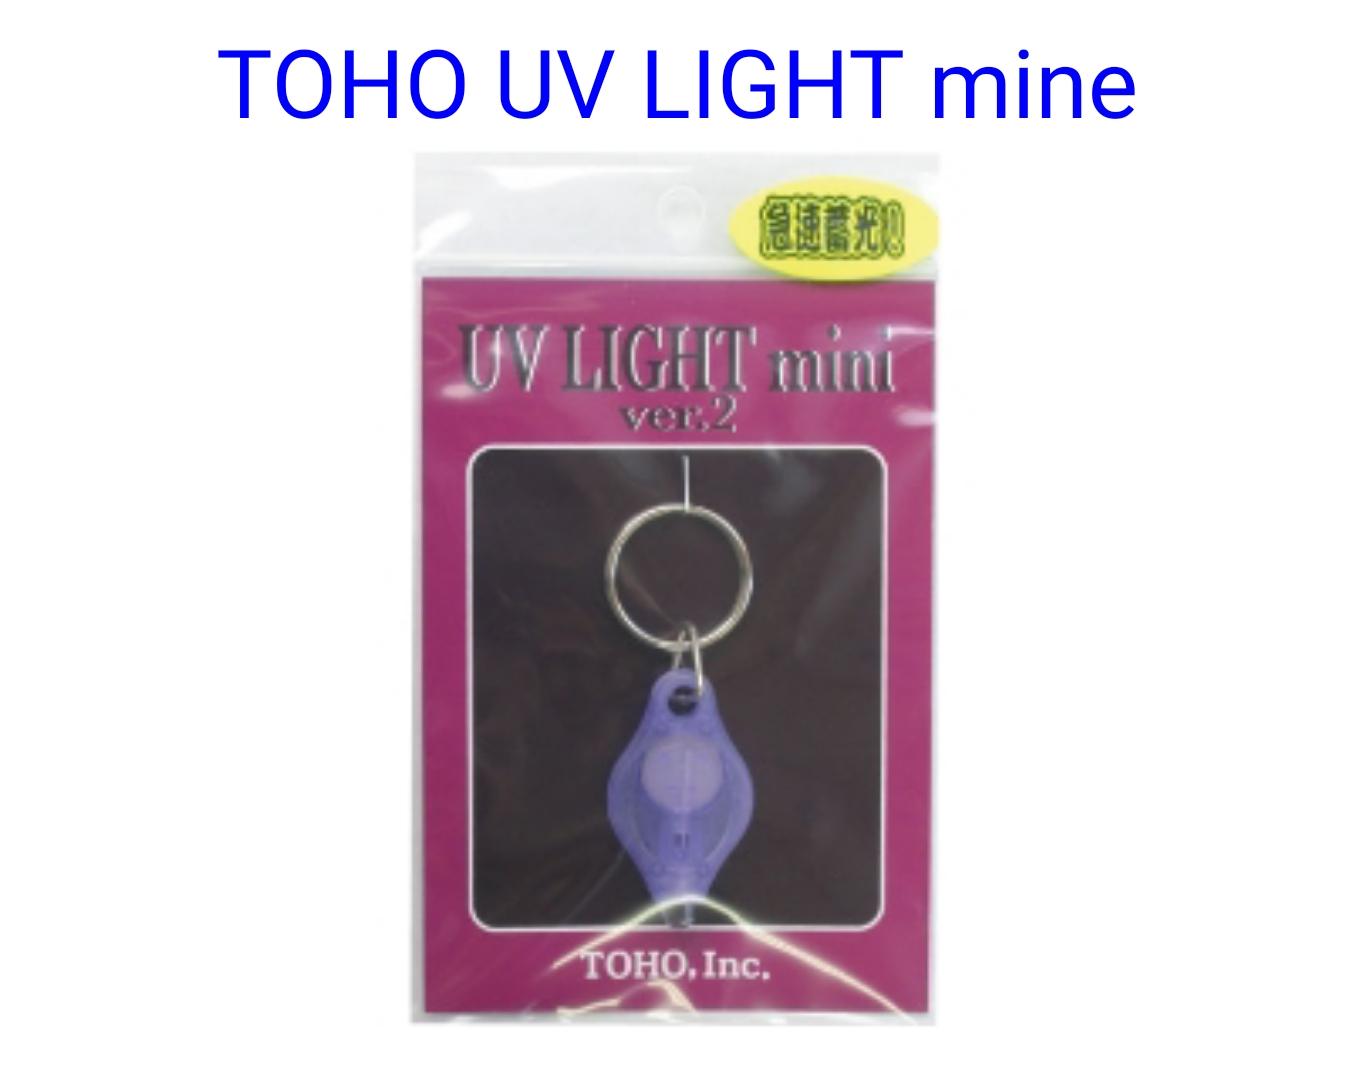 UV LIGHT mini ver.2